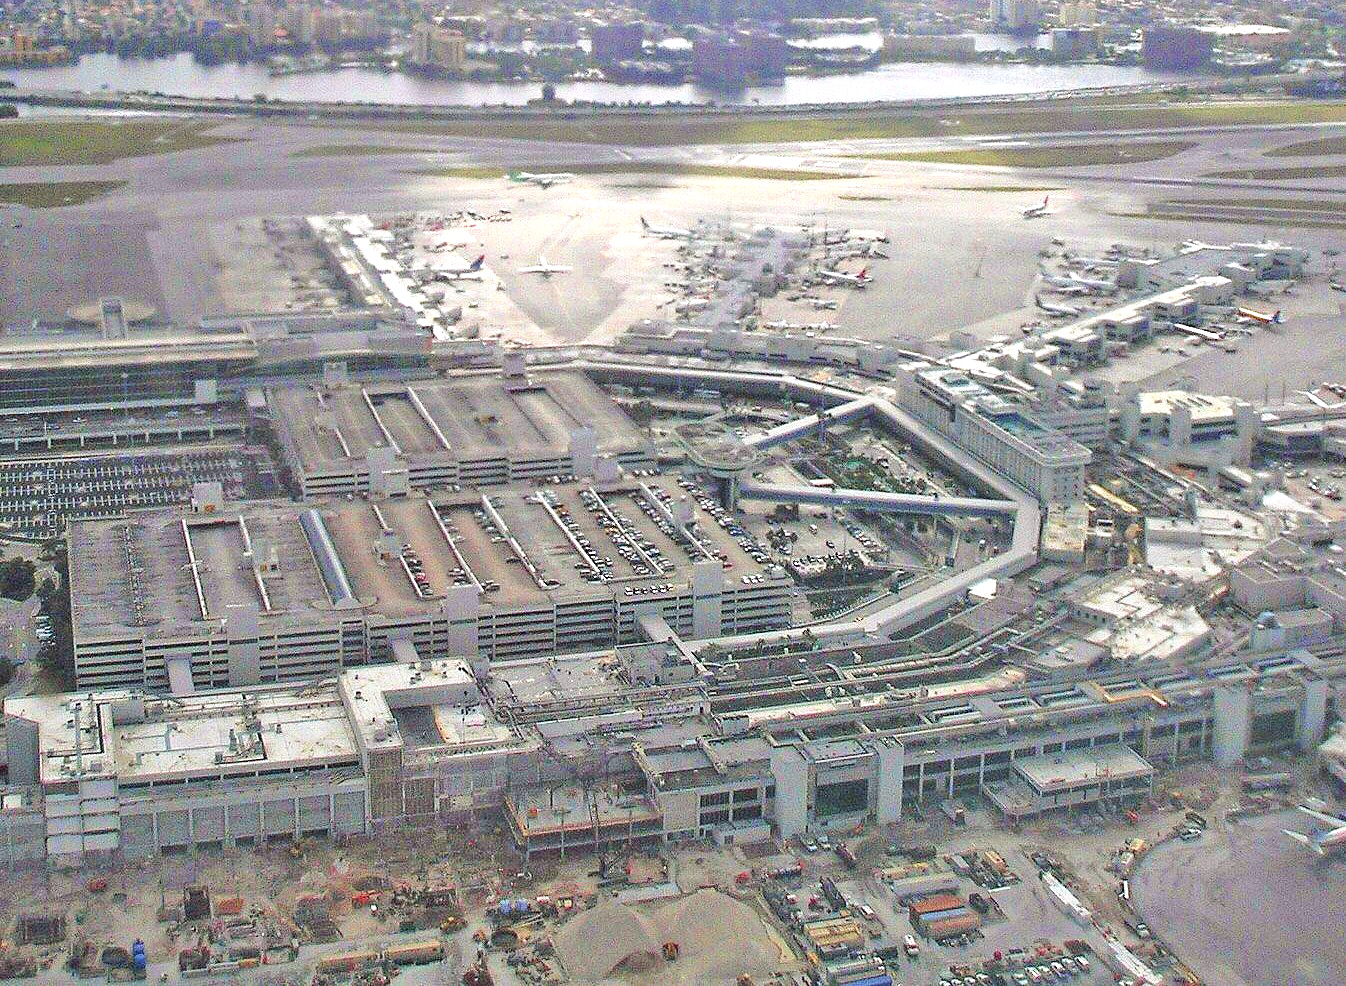 Miami International Airport in 2007 (Credit Marc Averette)